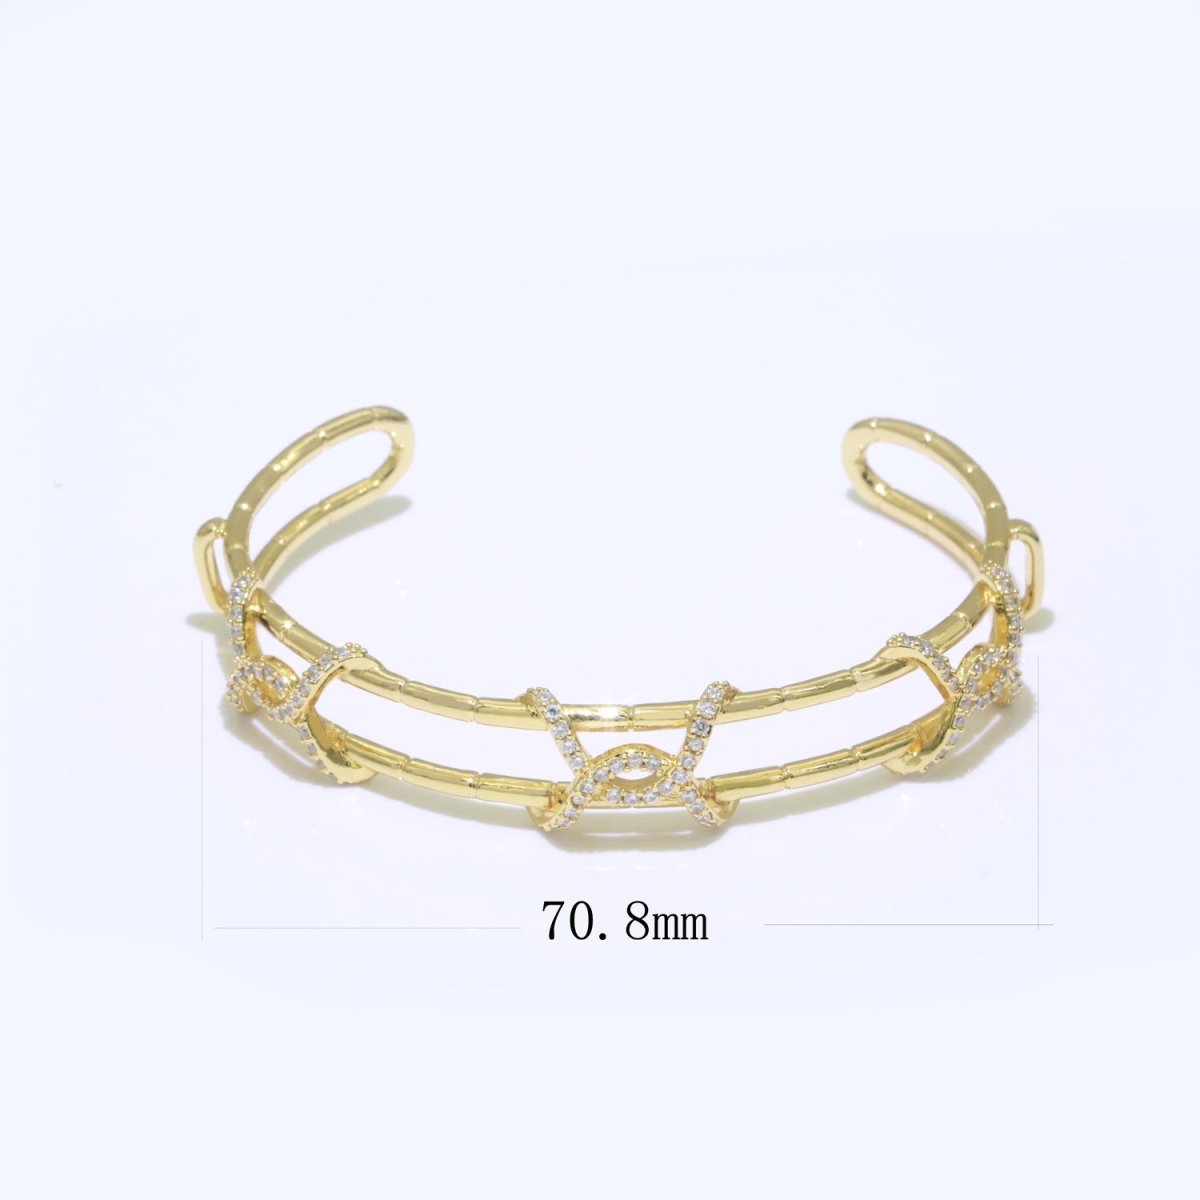 24K Shiny Gold Filled Adjustable Twisted Rope Bracelet, Twisted Bracelet, Open Cuff Rope Bangle, Stacking Bracelet | WA-140 Clearance Pricing - DLUXCA